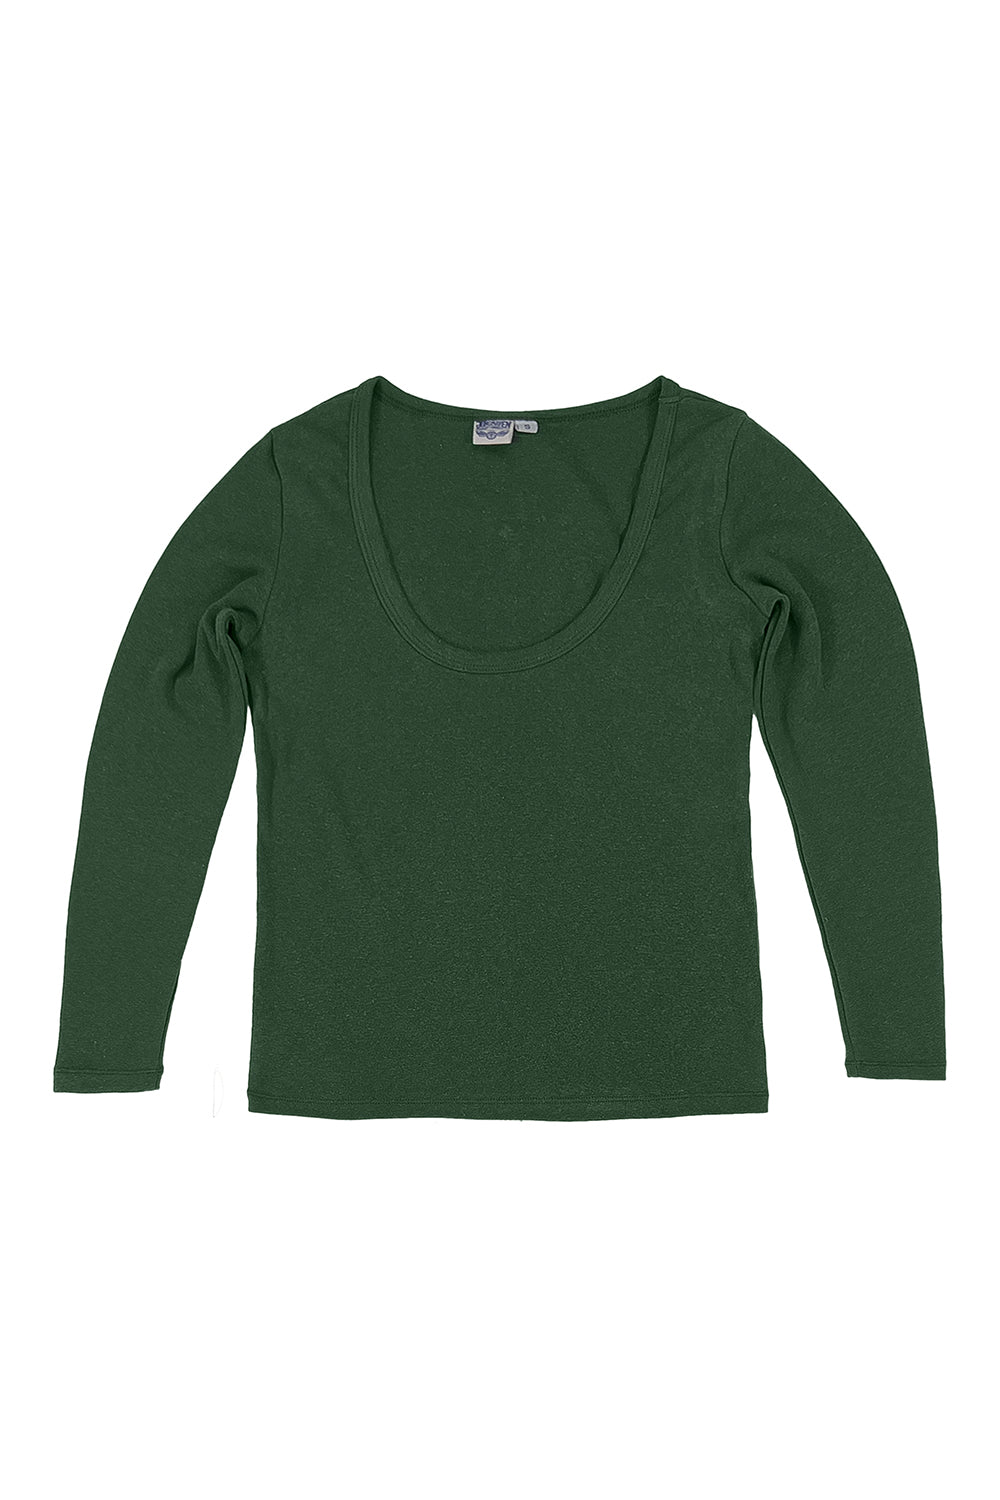 Paseo Long Sleeve Tee | Jungmaven Hemp Clothing & Accessories / Color: Hunter Green